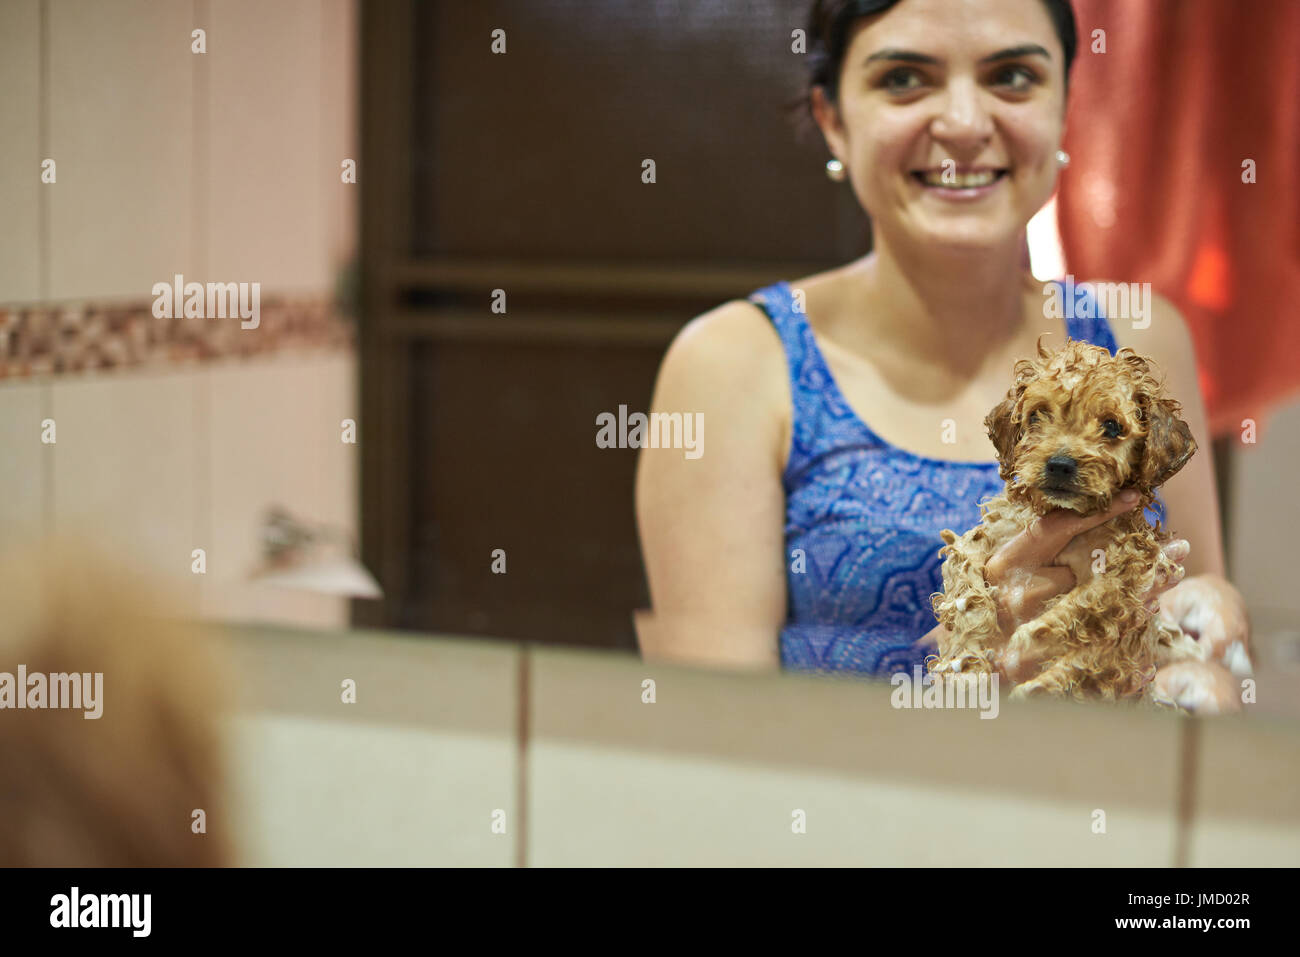 Chiot caniche mouillé moelleux. Smiling woman washing puppy dog Banque D'Images